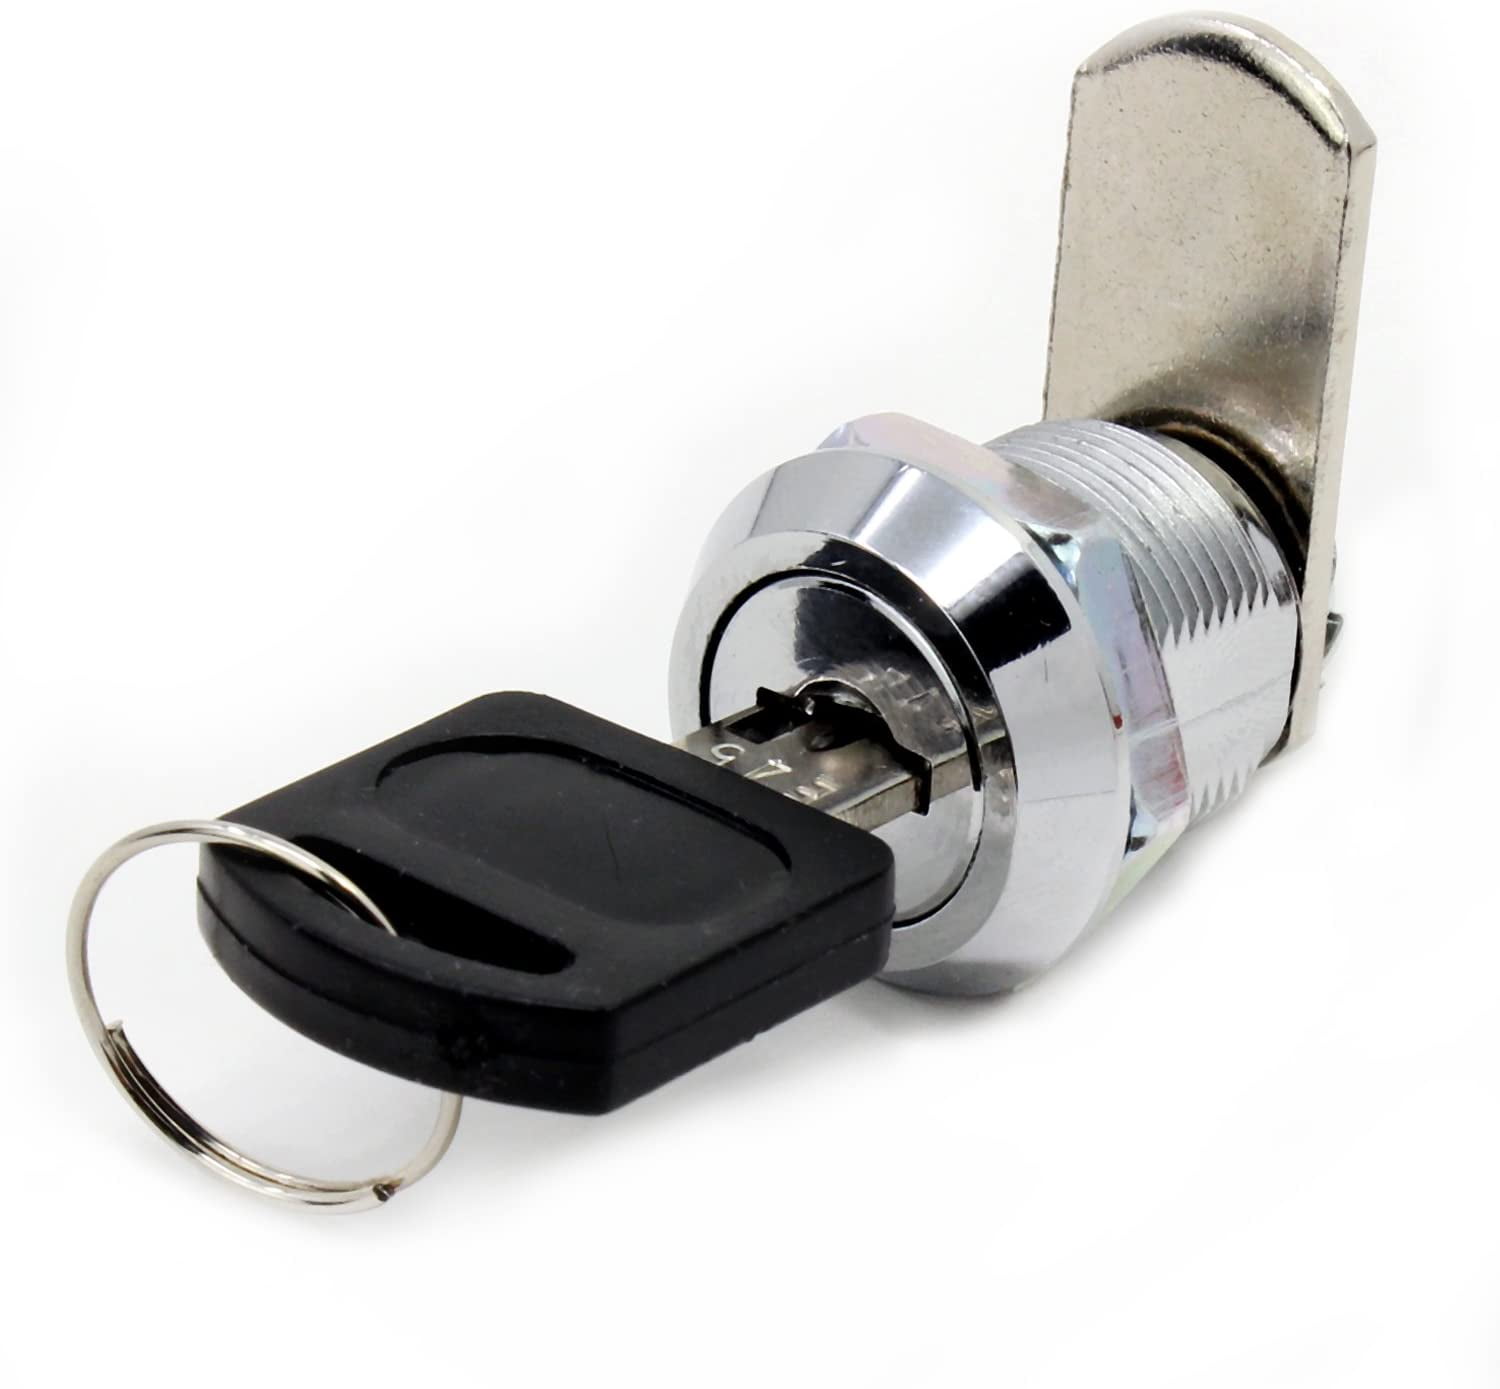 HSEAMALL 16mm Mailbox Lock Cabinet Lock Security Locker Lock Letter Post Box Lock for Drawer Cam Cupboard Locks with Alike Keys